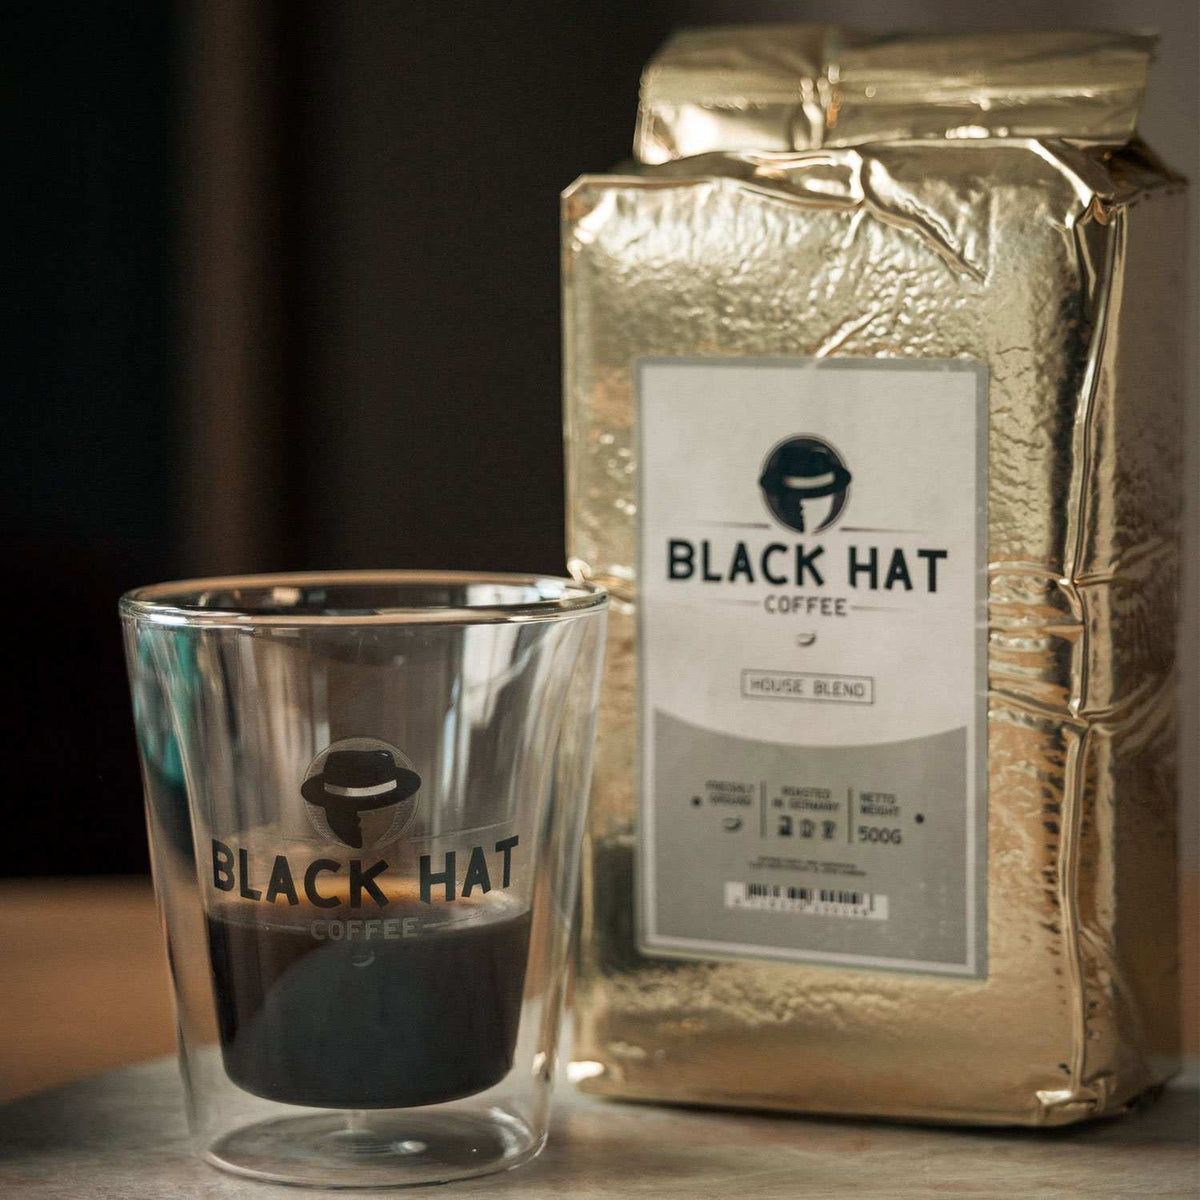 Black Hat Coffee House Blend (gemahlen) - Black Hat Coffee GmbH